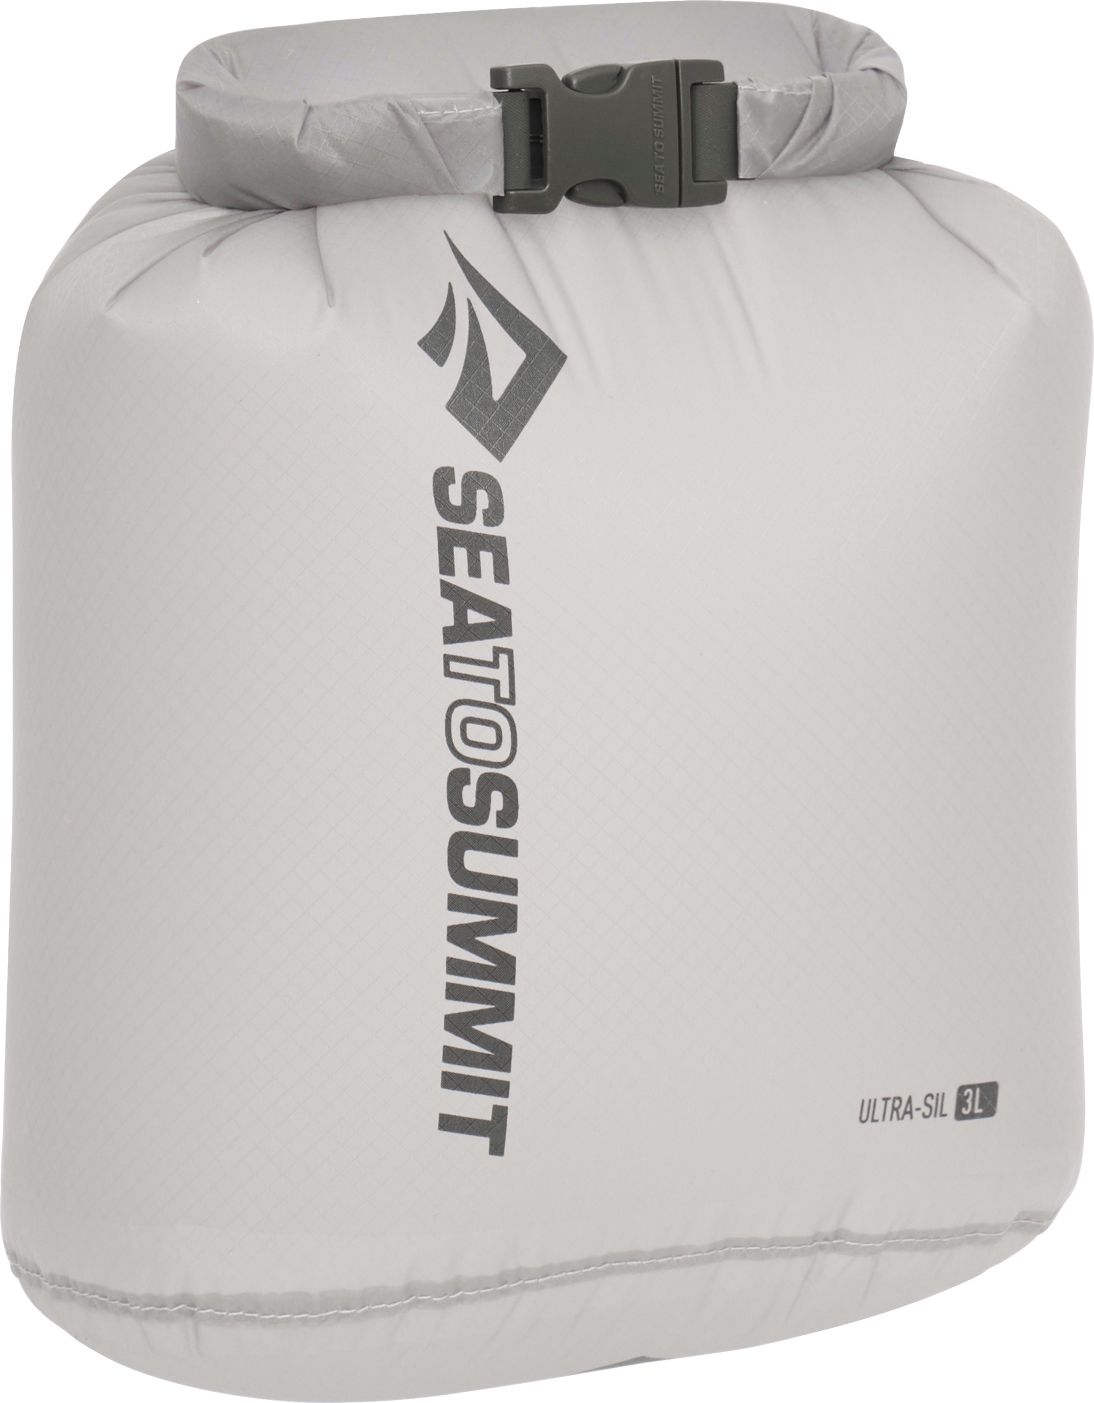 Ultra-Sil Dry Bag Eco 3L RISE